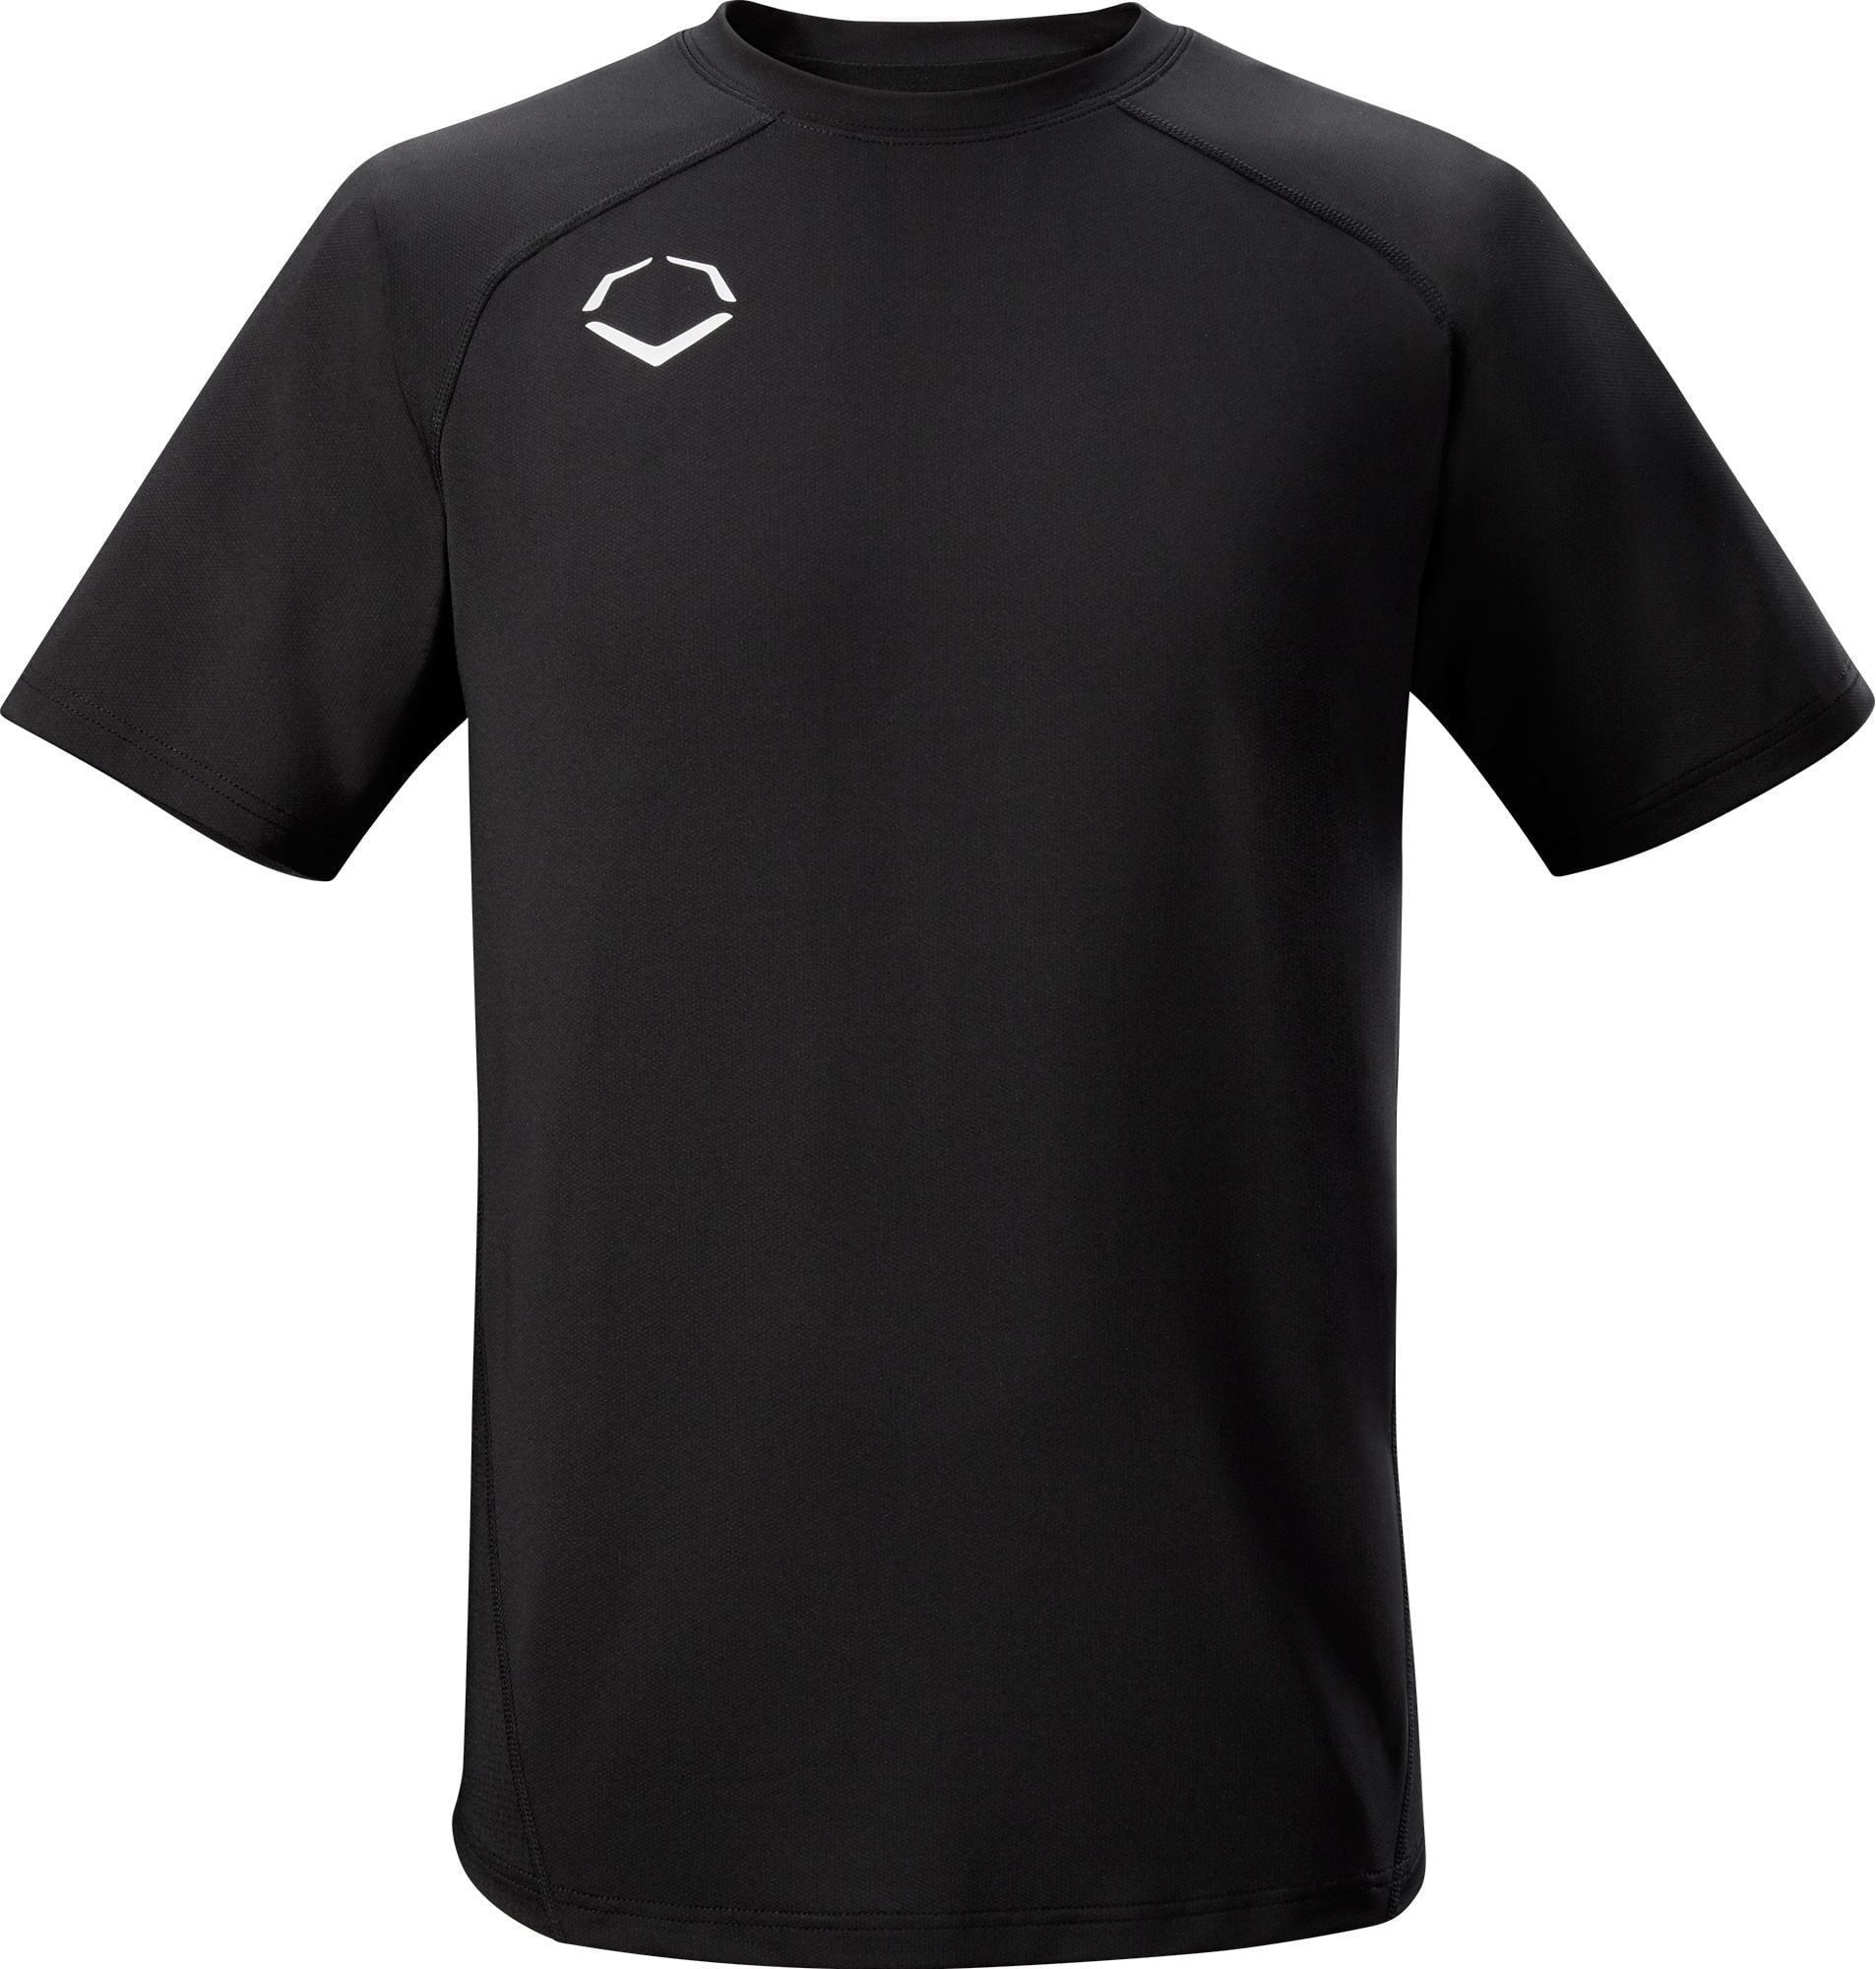 EvoShield Men's Performance Long Sleeve Training Shirt Black 